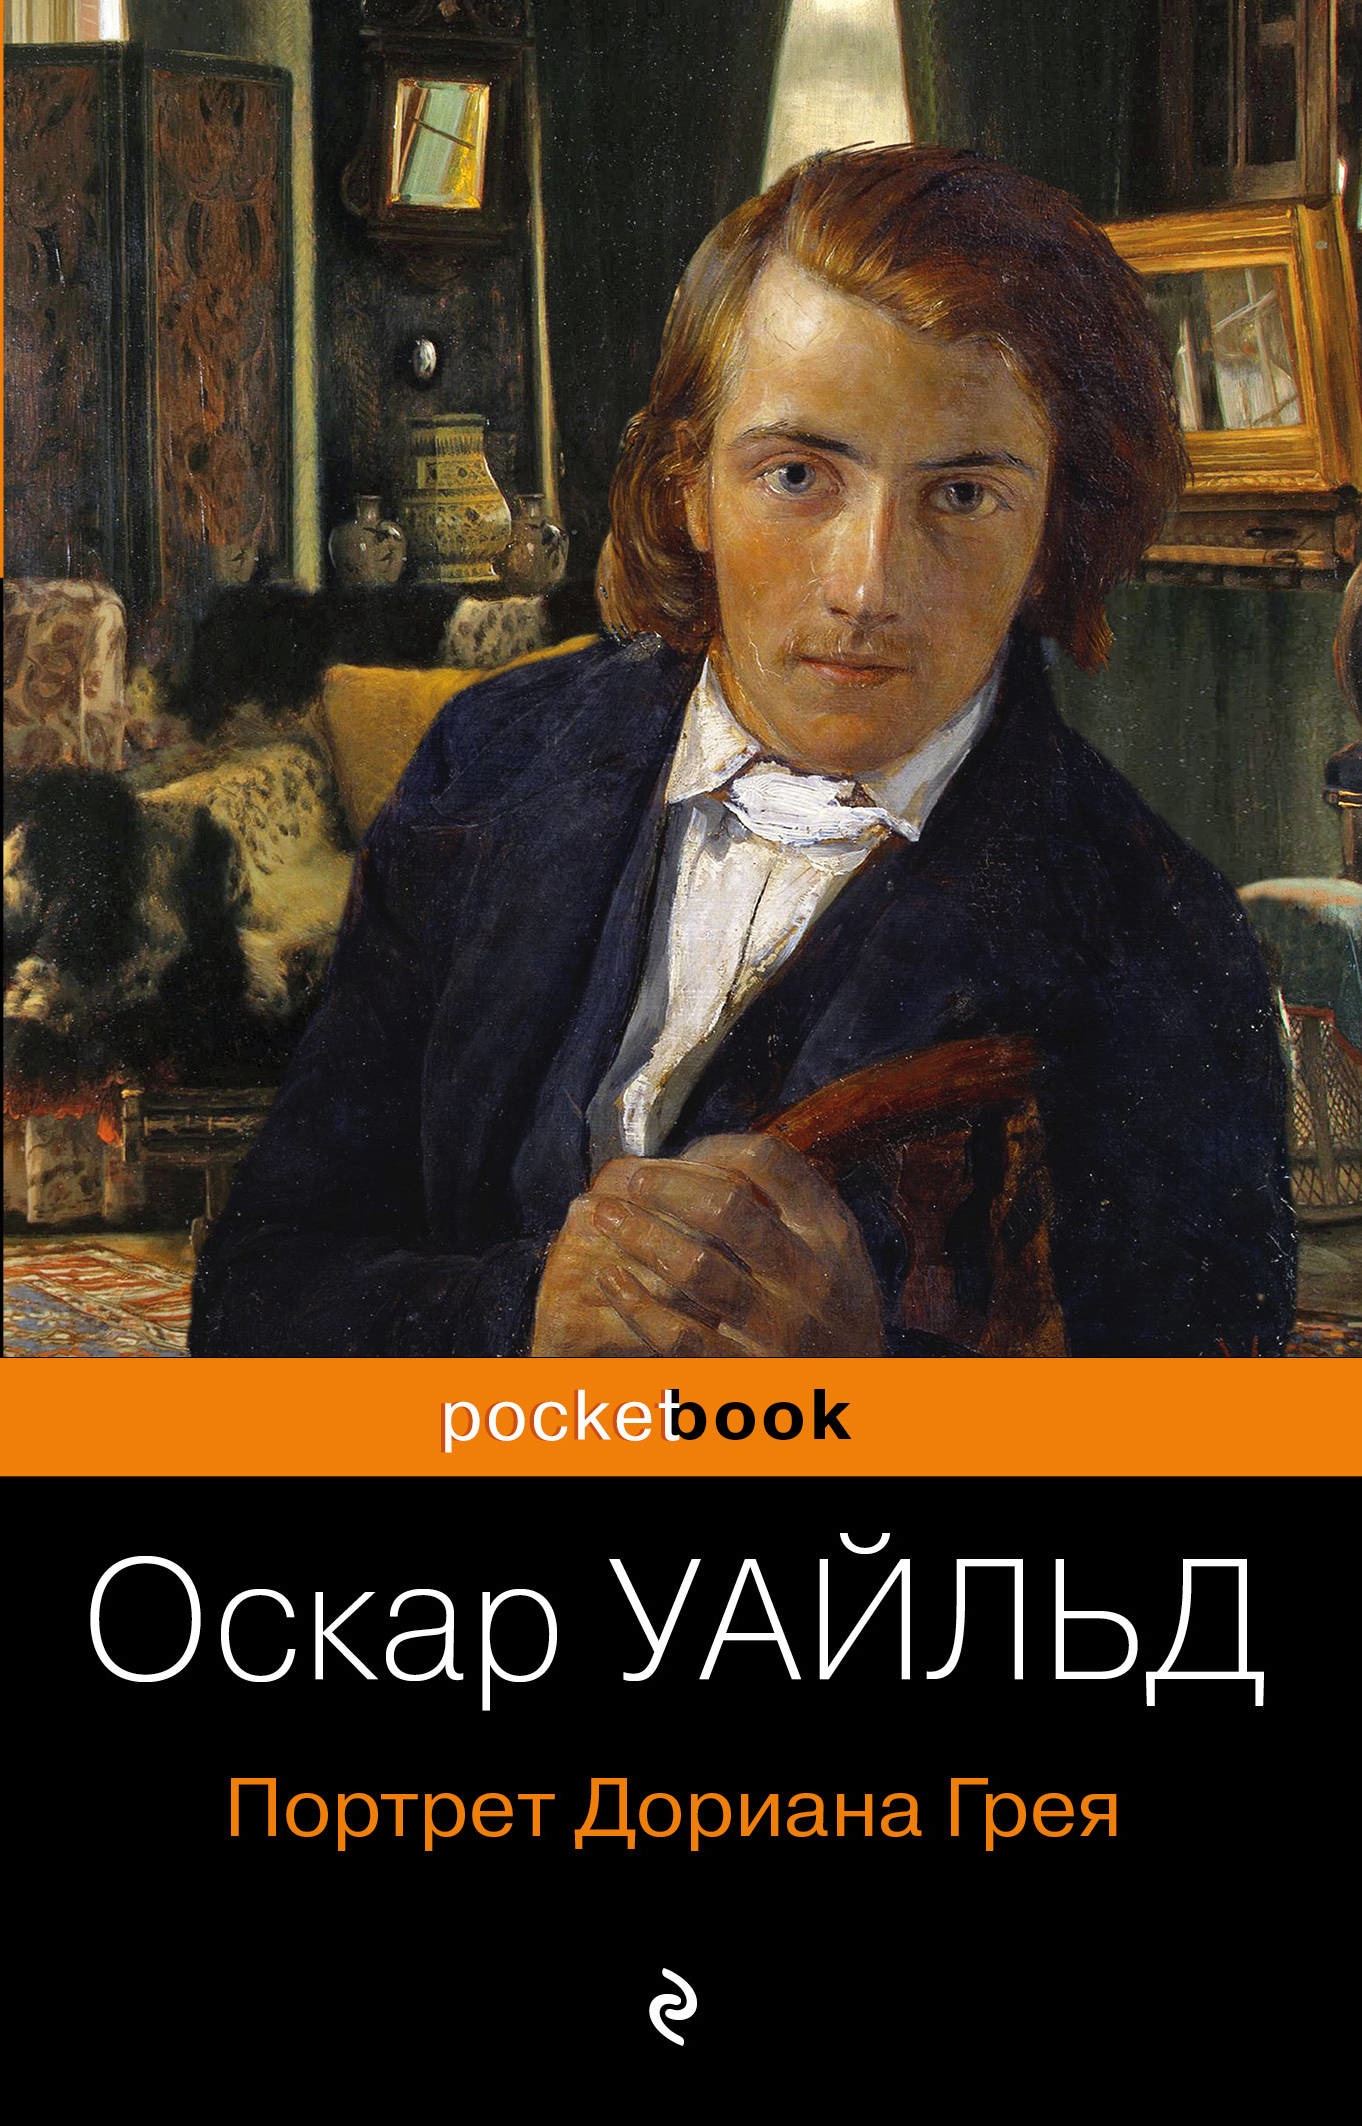 Book “Портрет Дориана Грея” by Оскар Уайльд — February 17, 2020